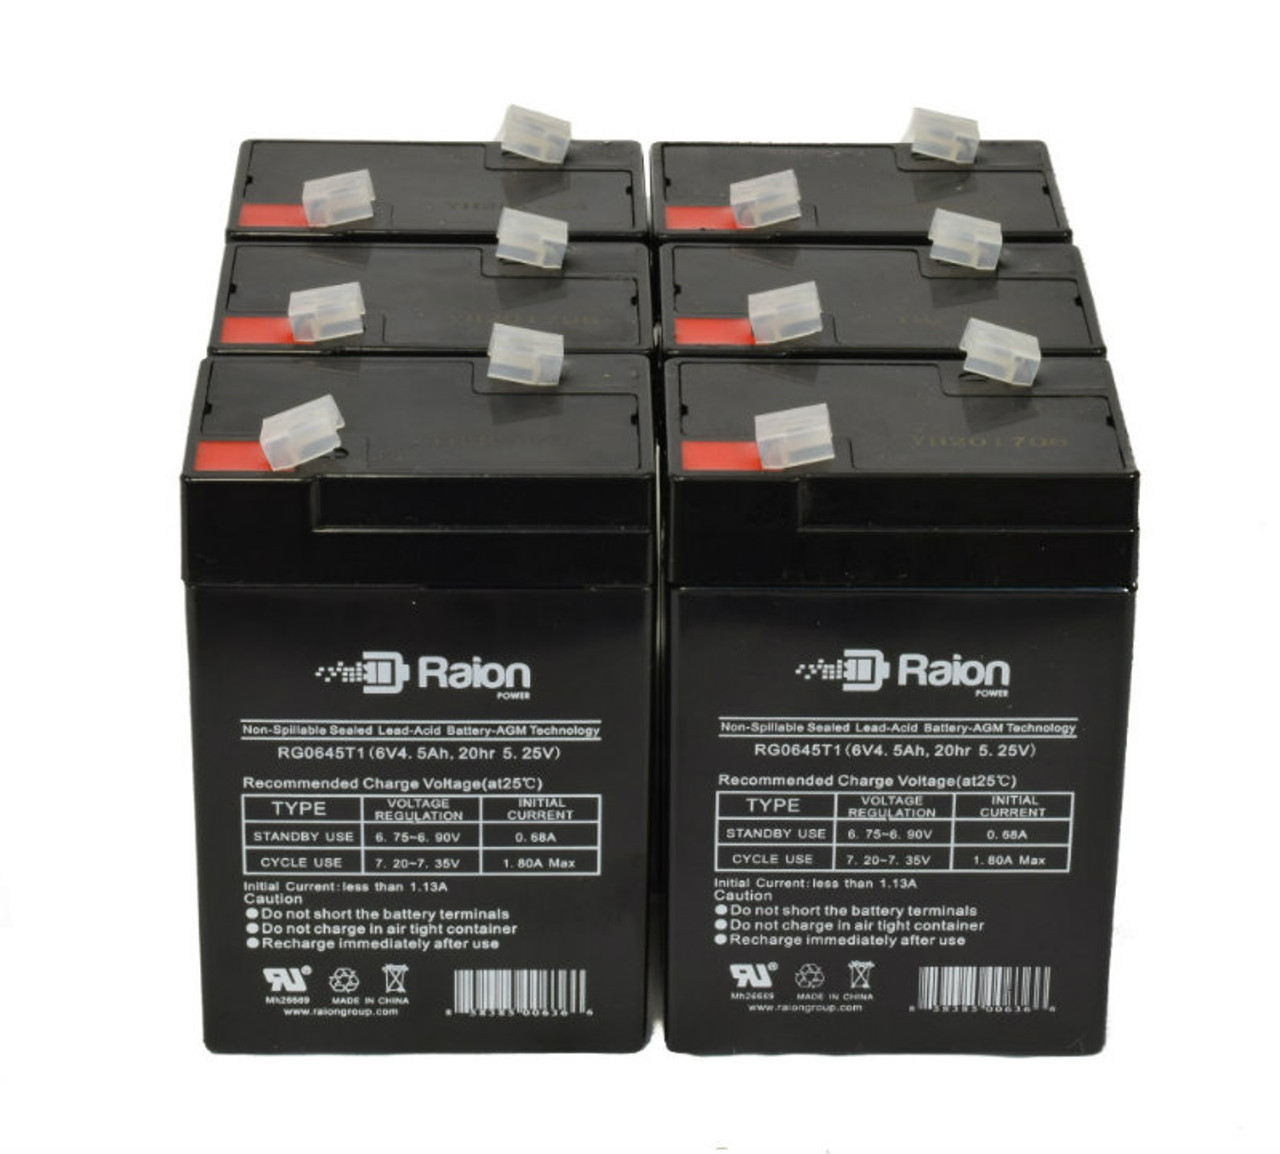 Raion Power 6V 4.5Ah Replacement Emergency Light Battery for Sonnenschein 3TX25 - 6 Pack